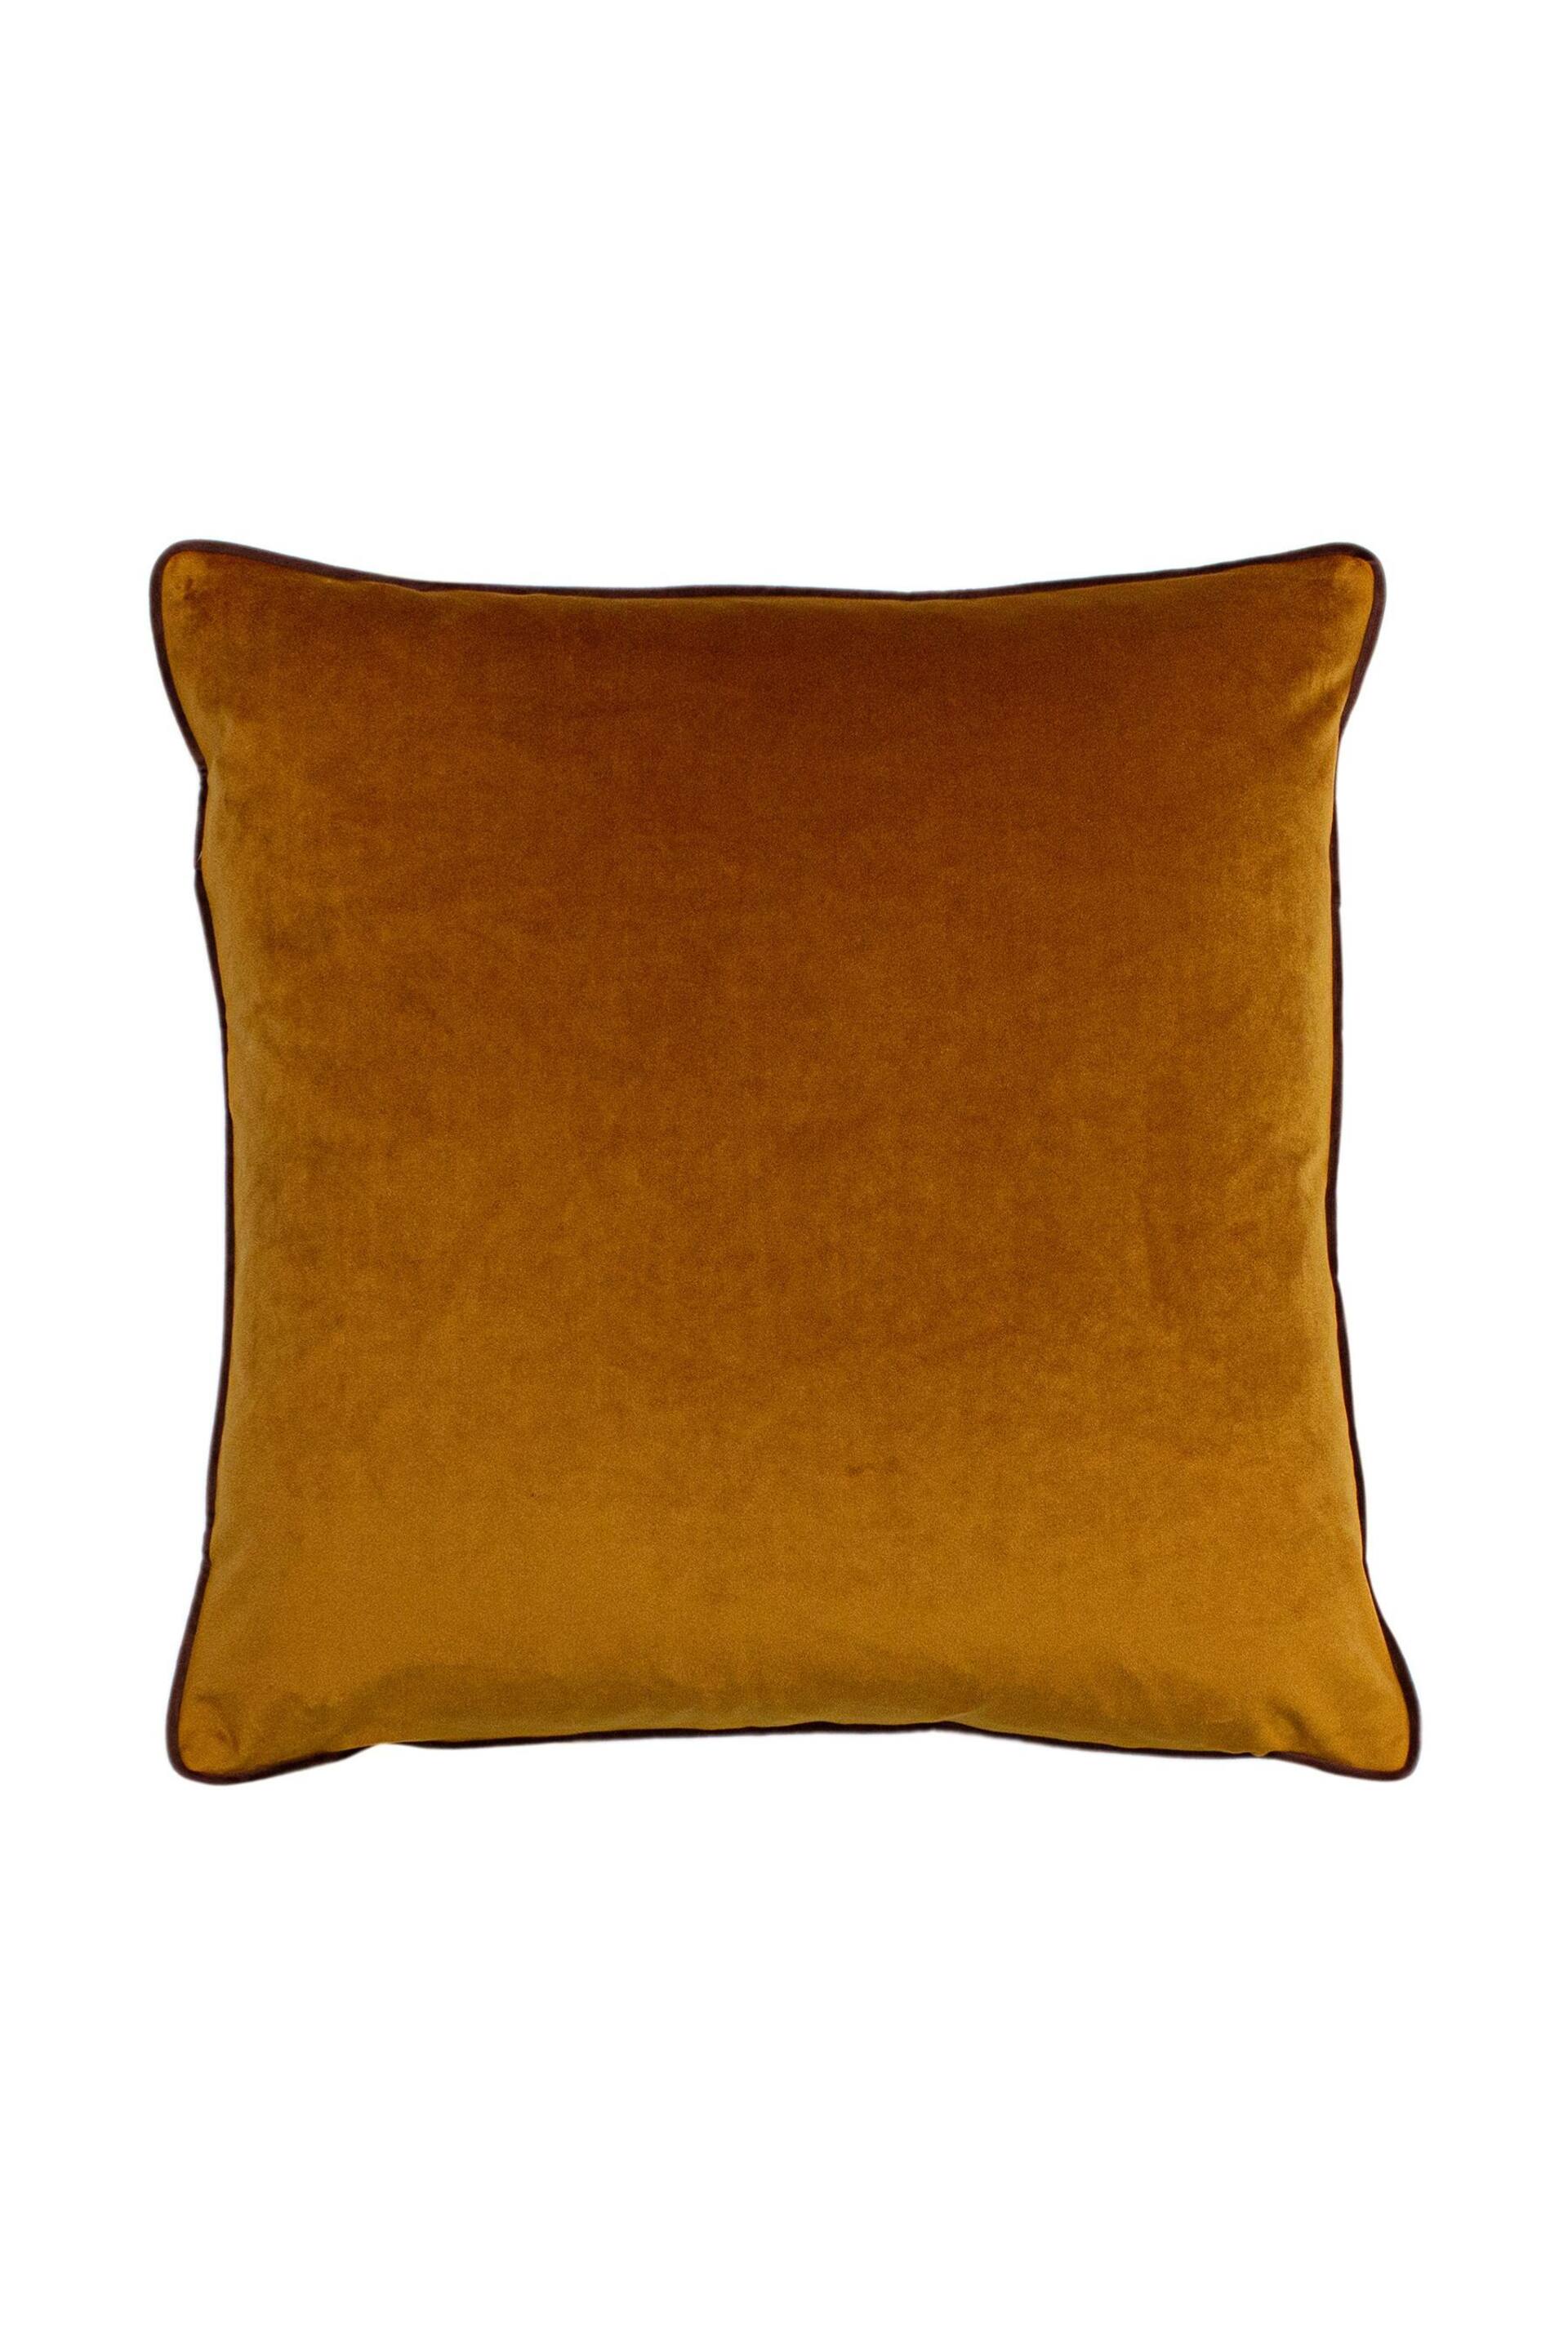 furn. Pumpkin Orange Gemini Double Piped Feather Filled Cushion - Image 1 of 4